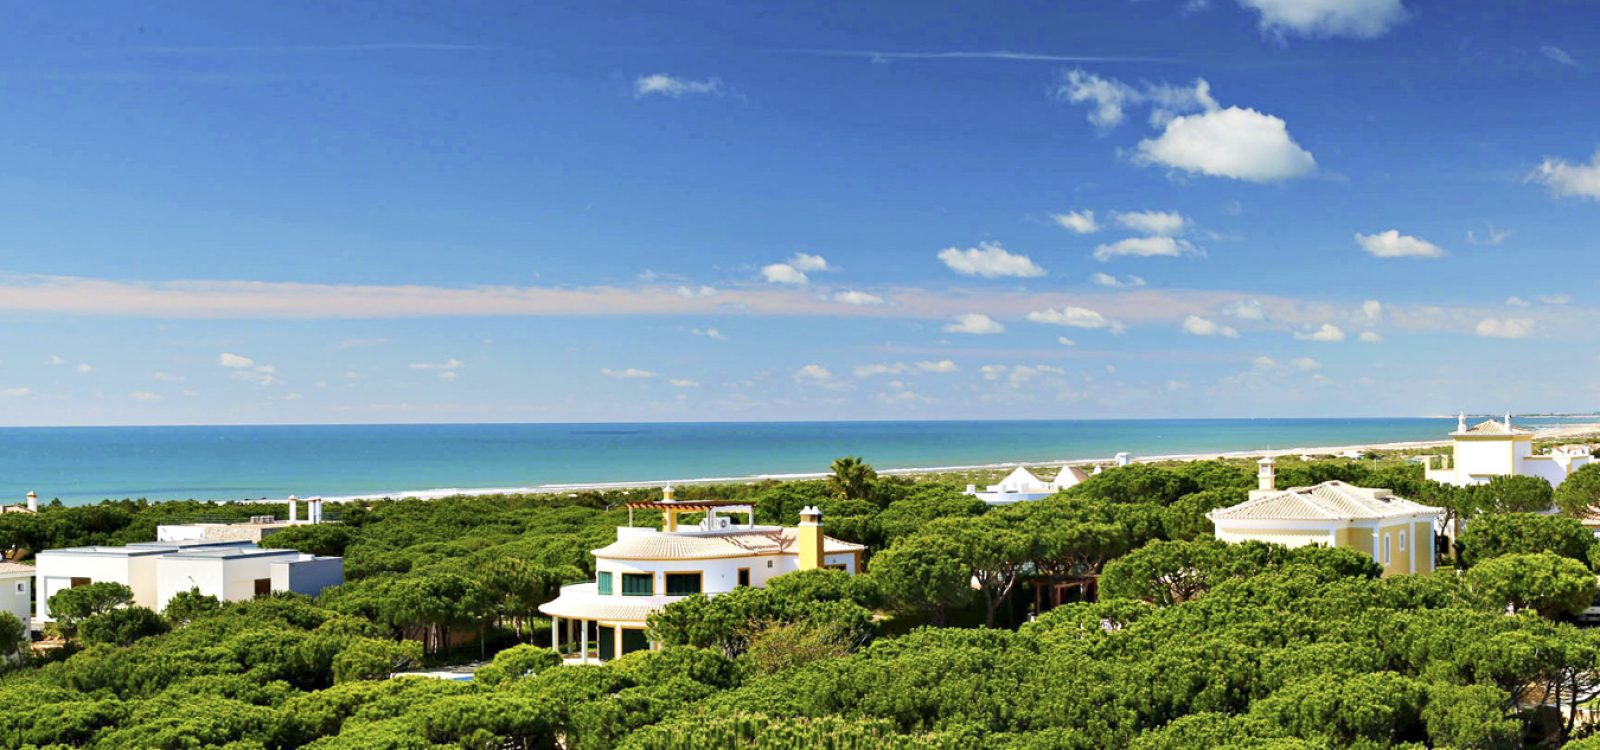 Praia Verde Boutique Hotel-Hotel_view-WEB